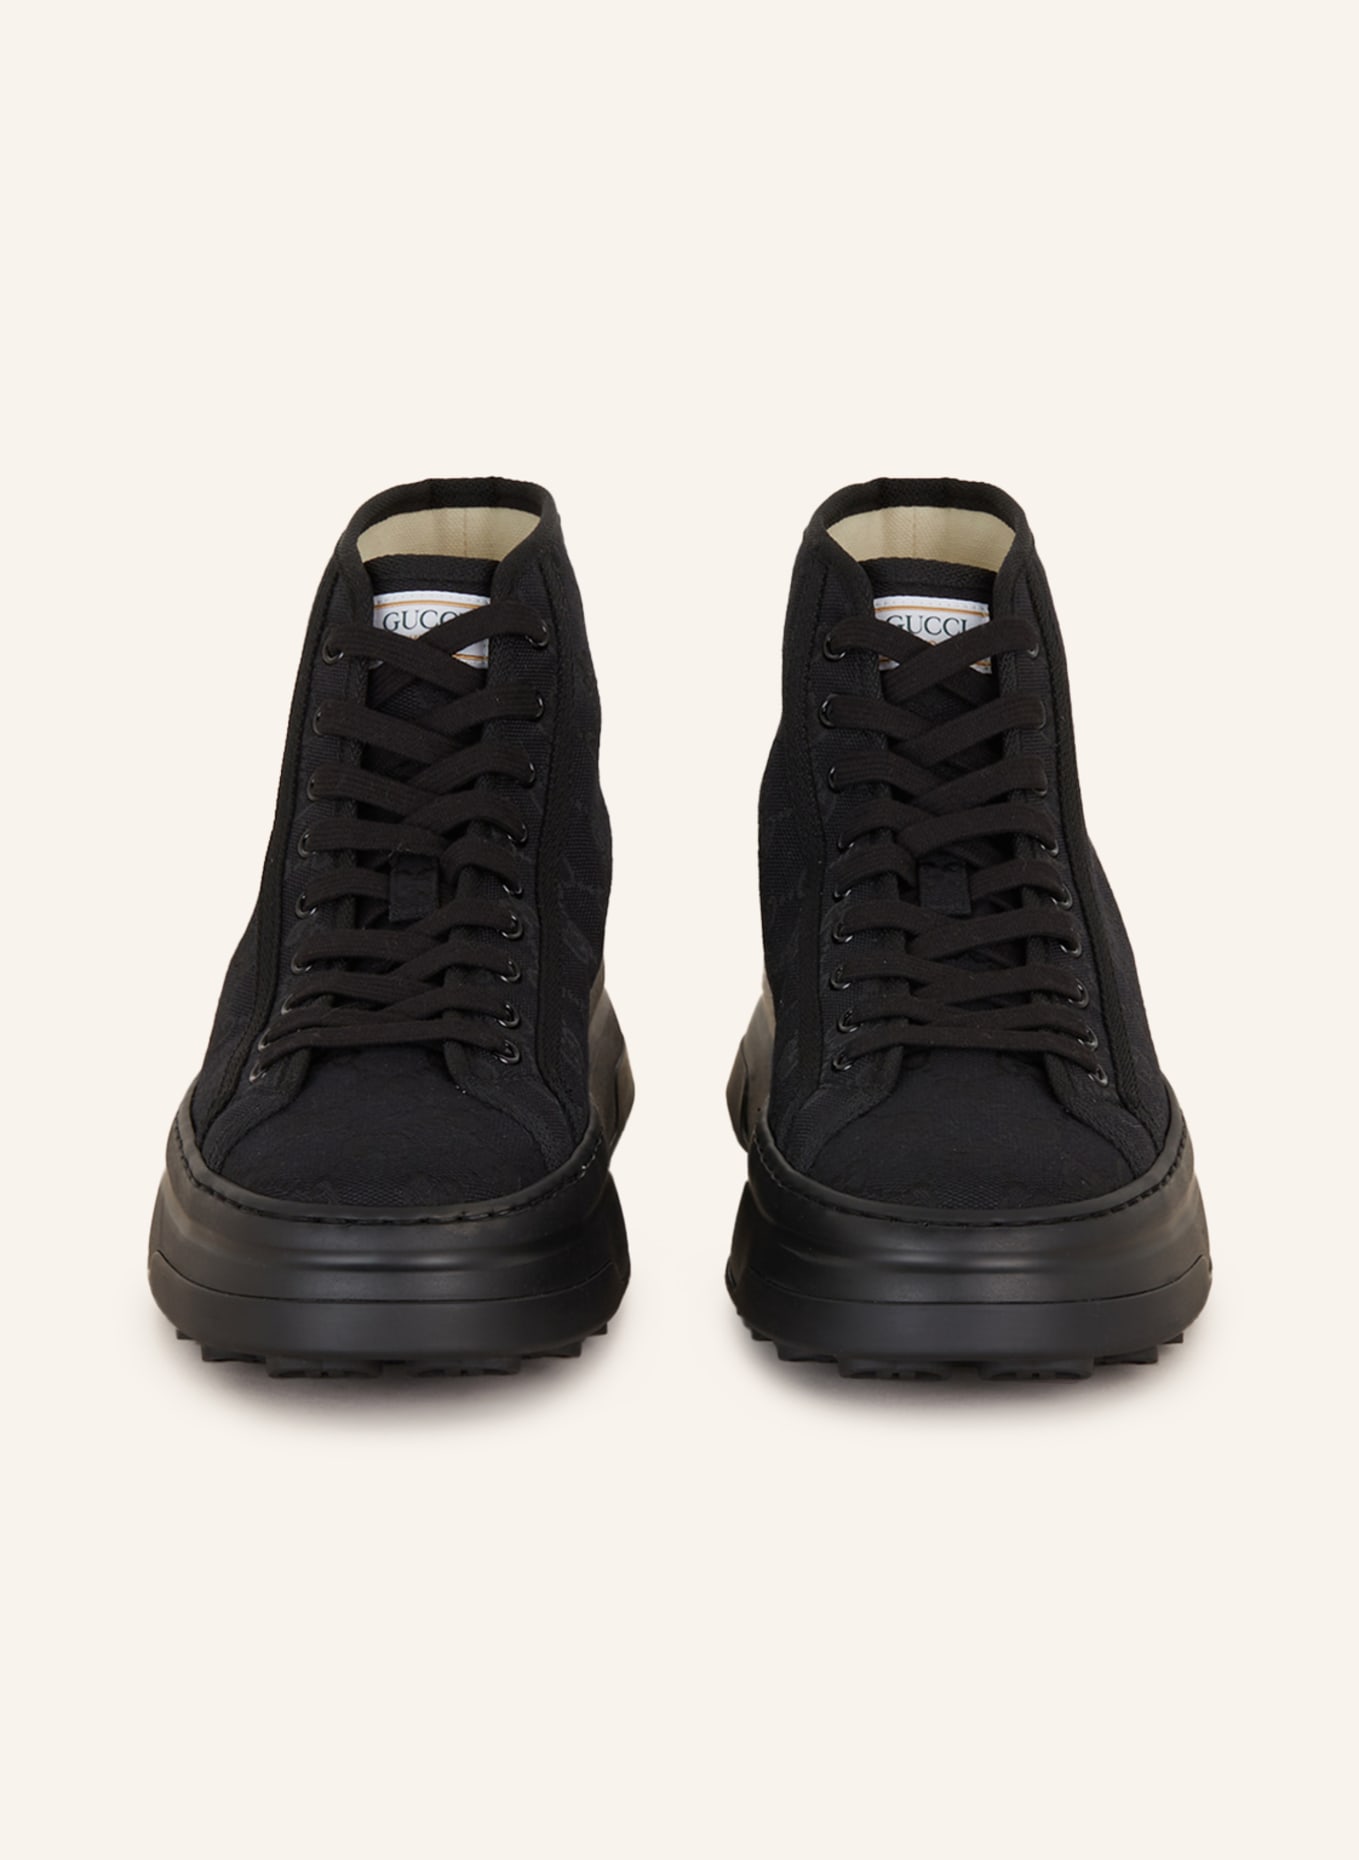 GUCCI Hightop-Sneaker, Farbe: 1000 BLACK/BLACK (Bild 3)